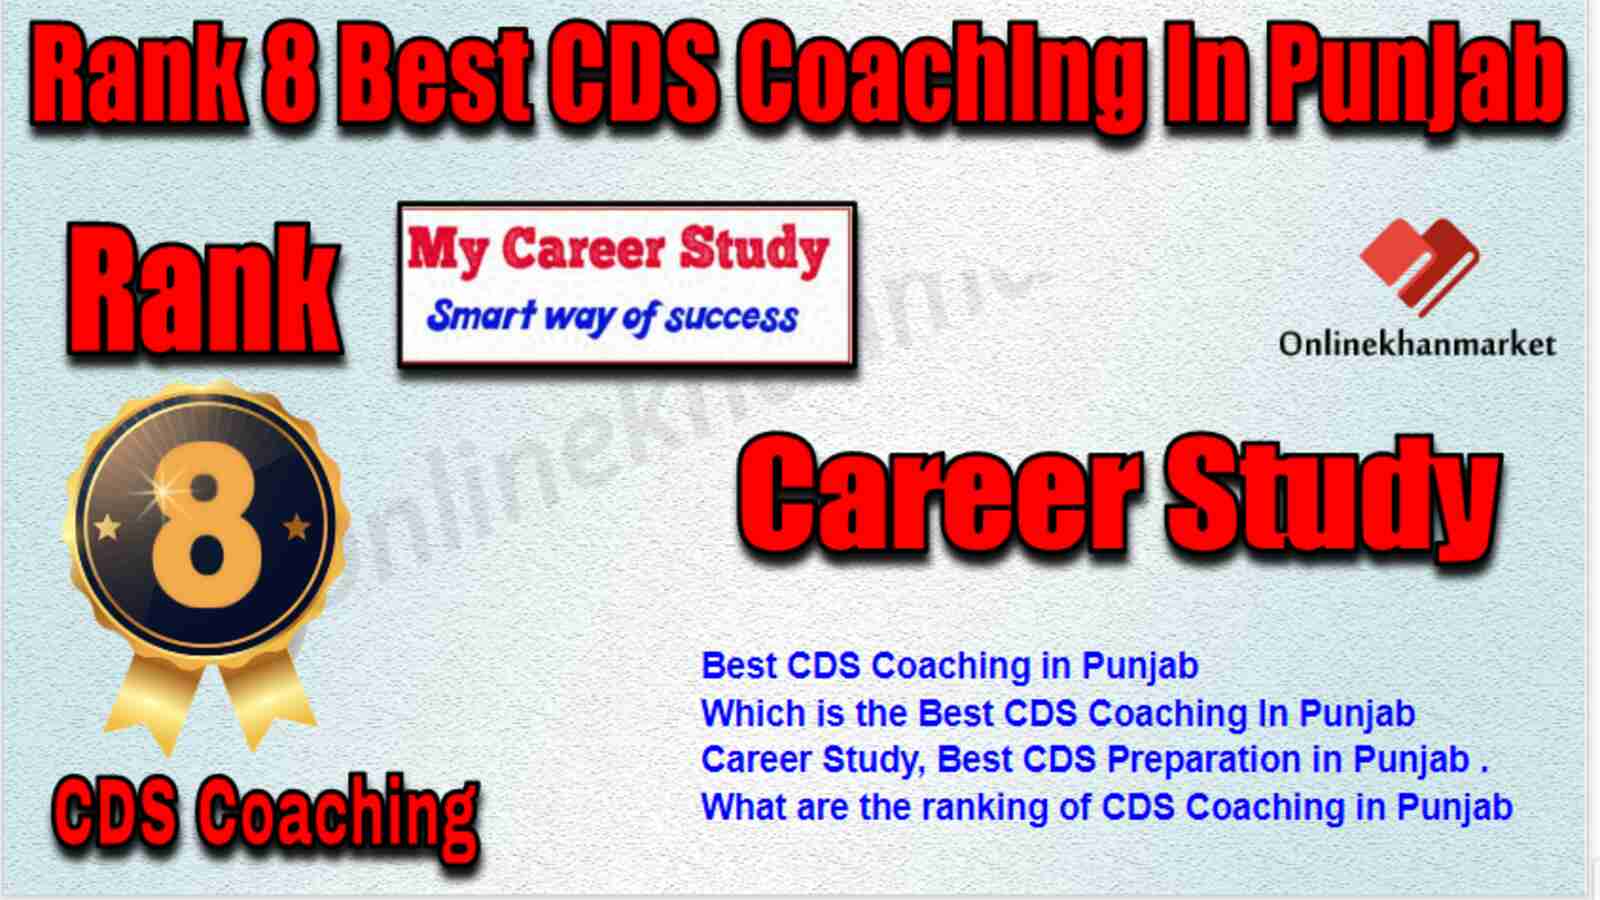 Rank 8 Best CDS Coaching in Punjab